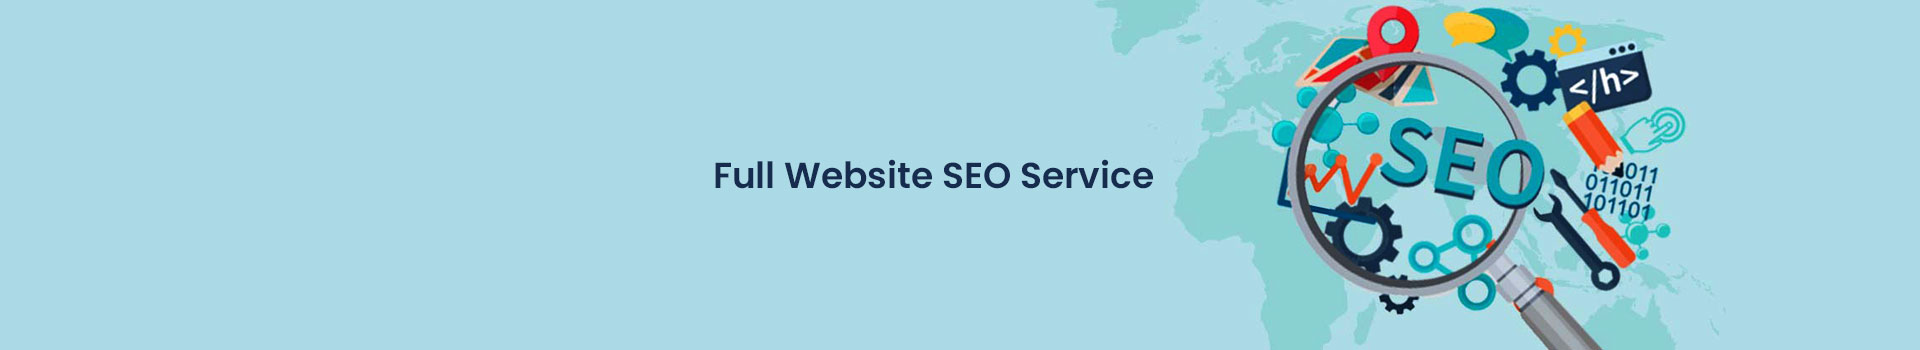 Full-Website-SEO-Service